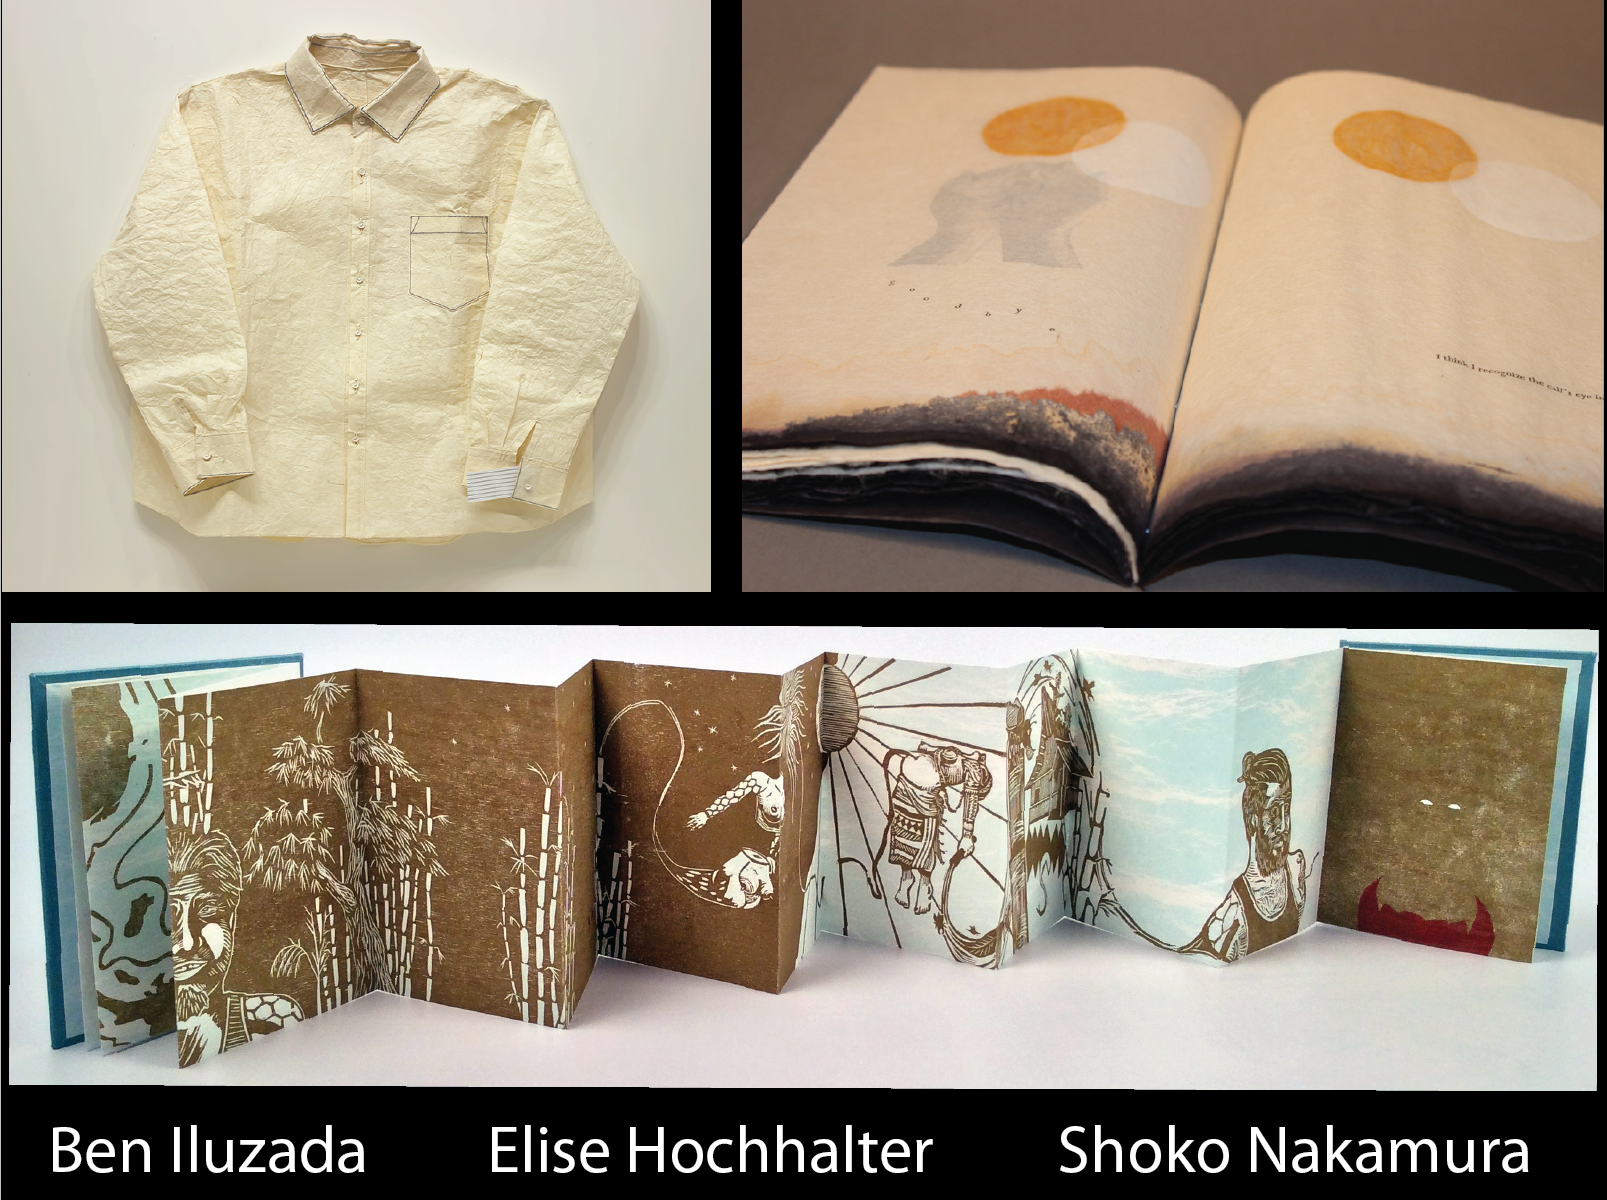 Artworks by Shoko Nakamura, Elise Hochhalter, and Bel Iluzada depicting interpretations of books.